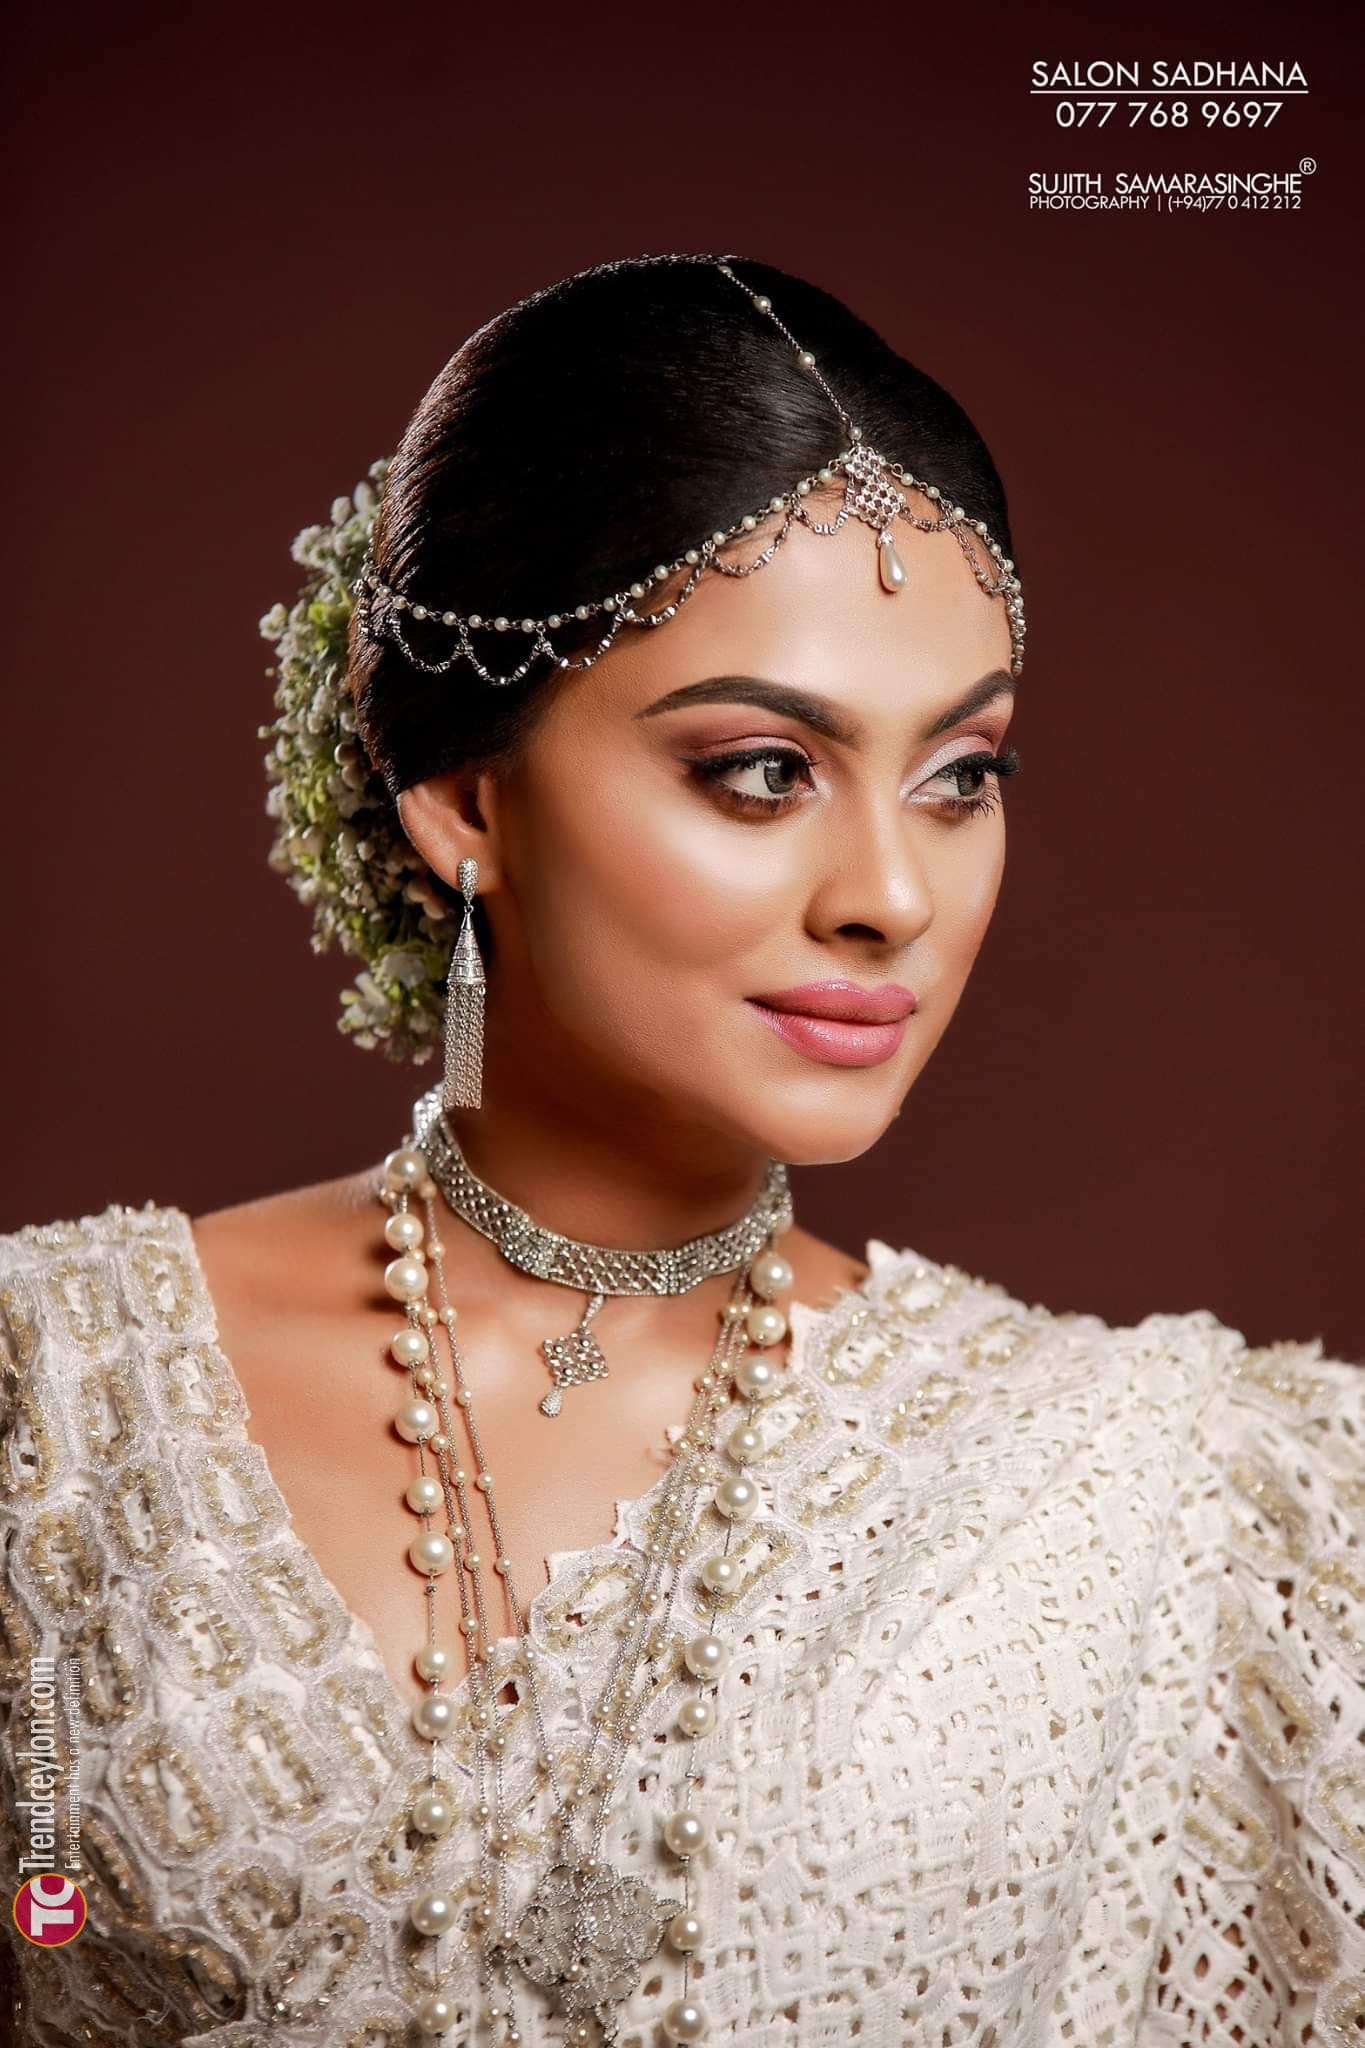 Model Darshi Nawarathna Looked Lovely In This Bridal Saree Shoot 